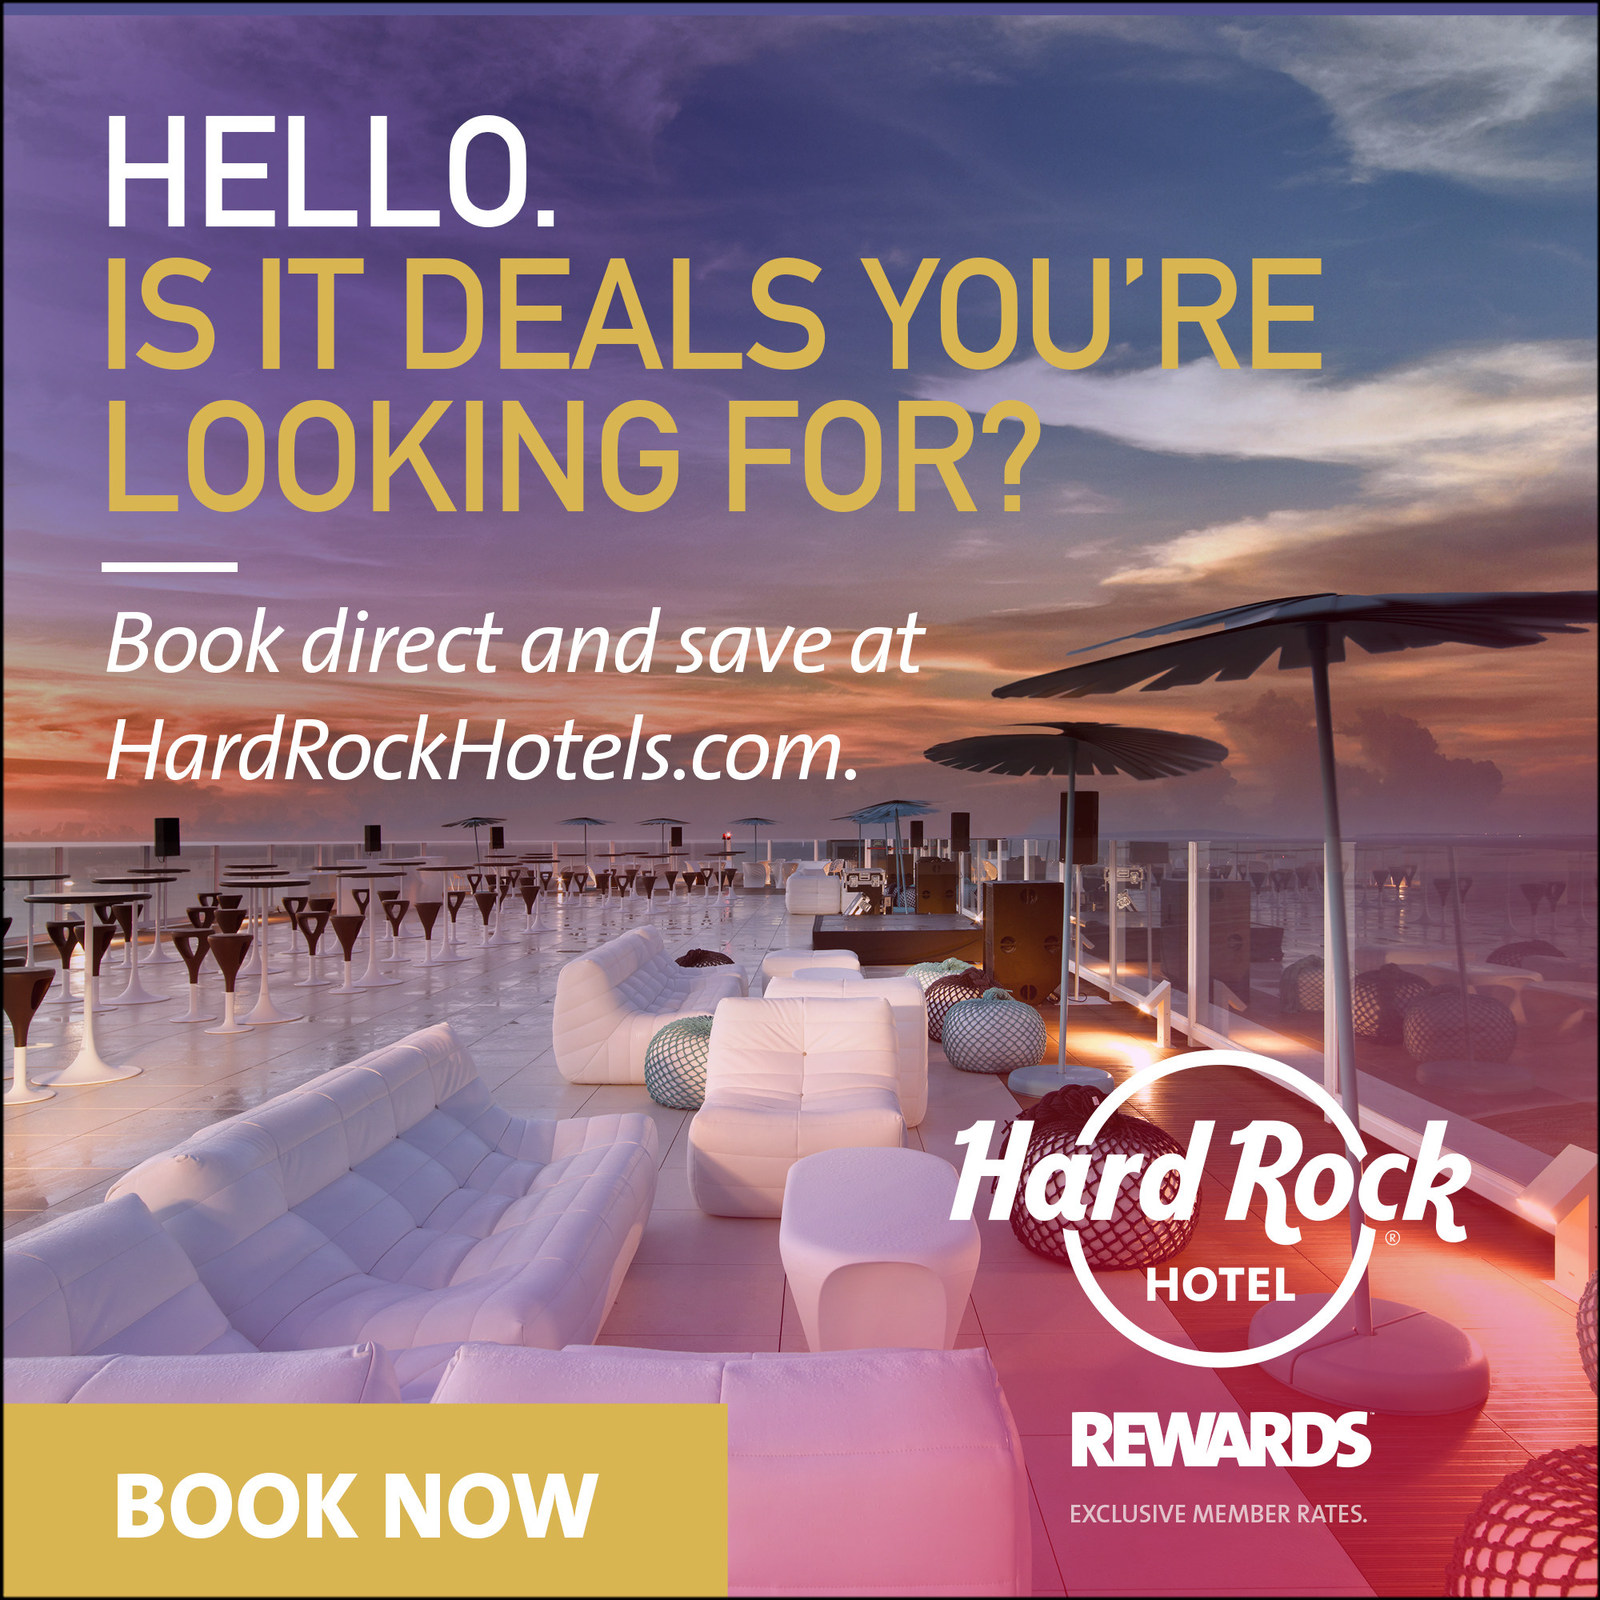 hard rock casino promo code january